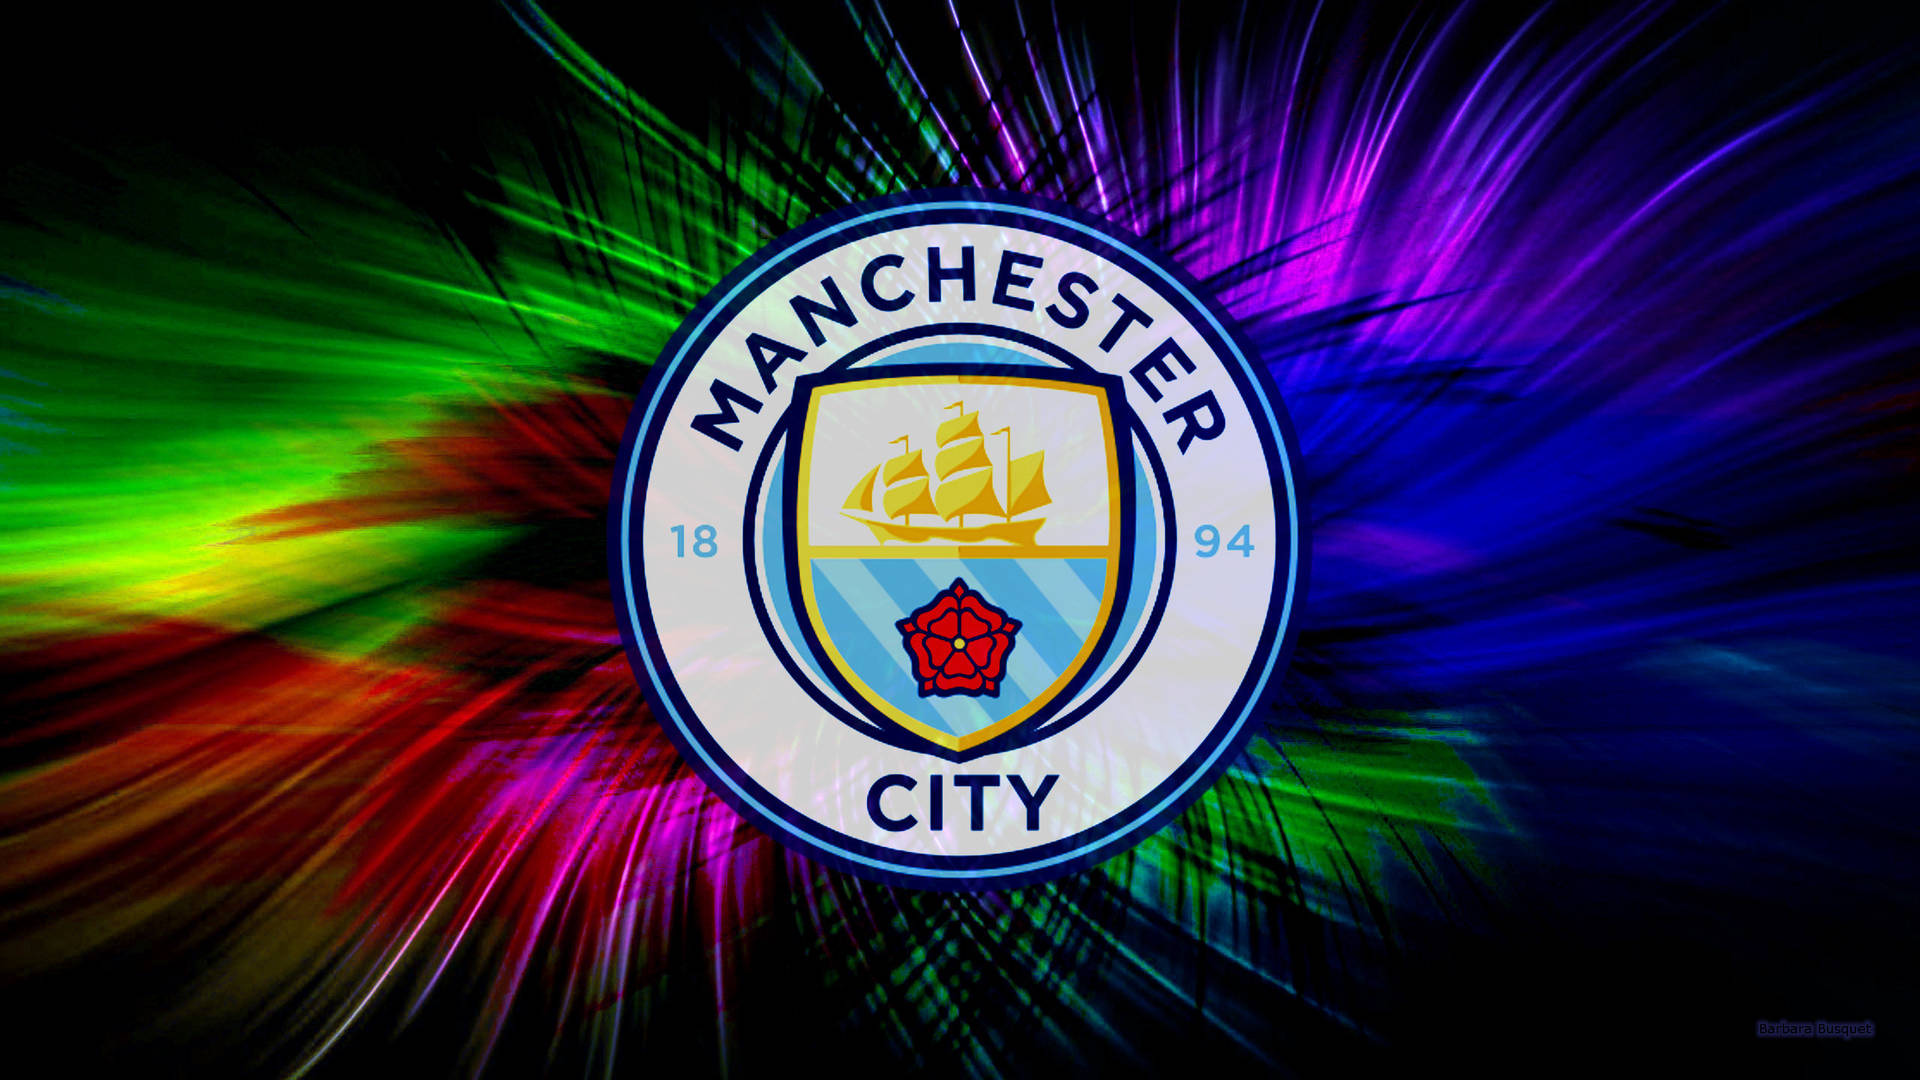 Free Manchester City Wallpaper Downloads, [300+] Manchester City Wallpapers  for FREE 